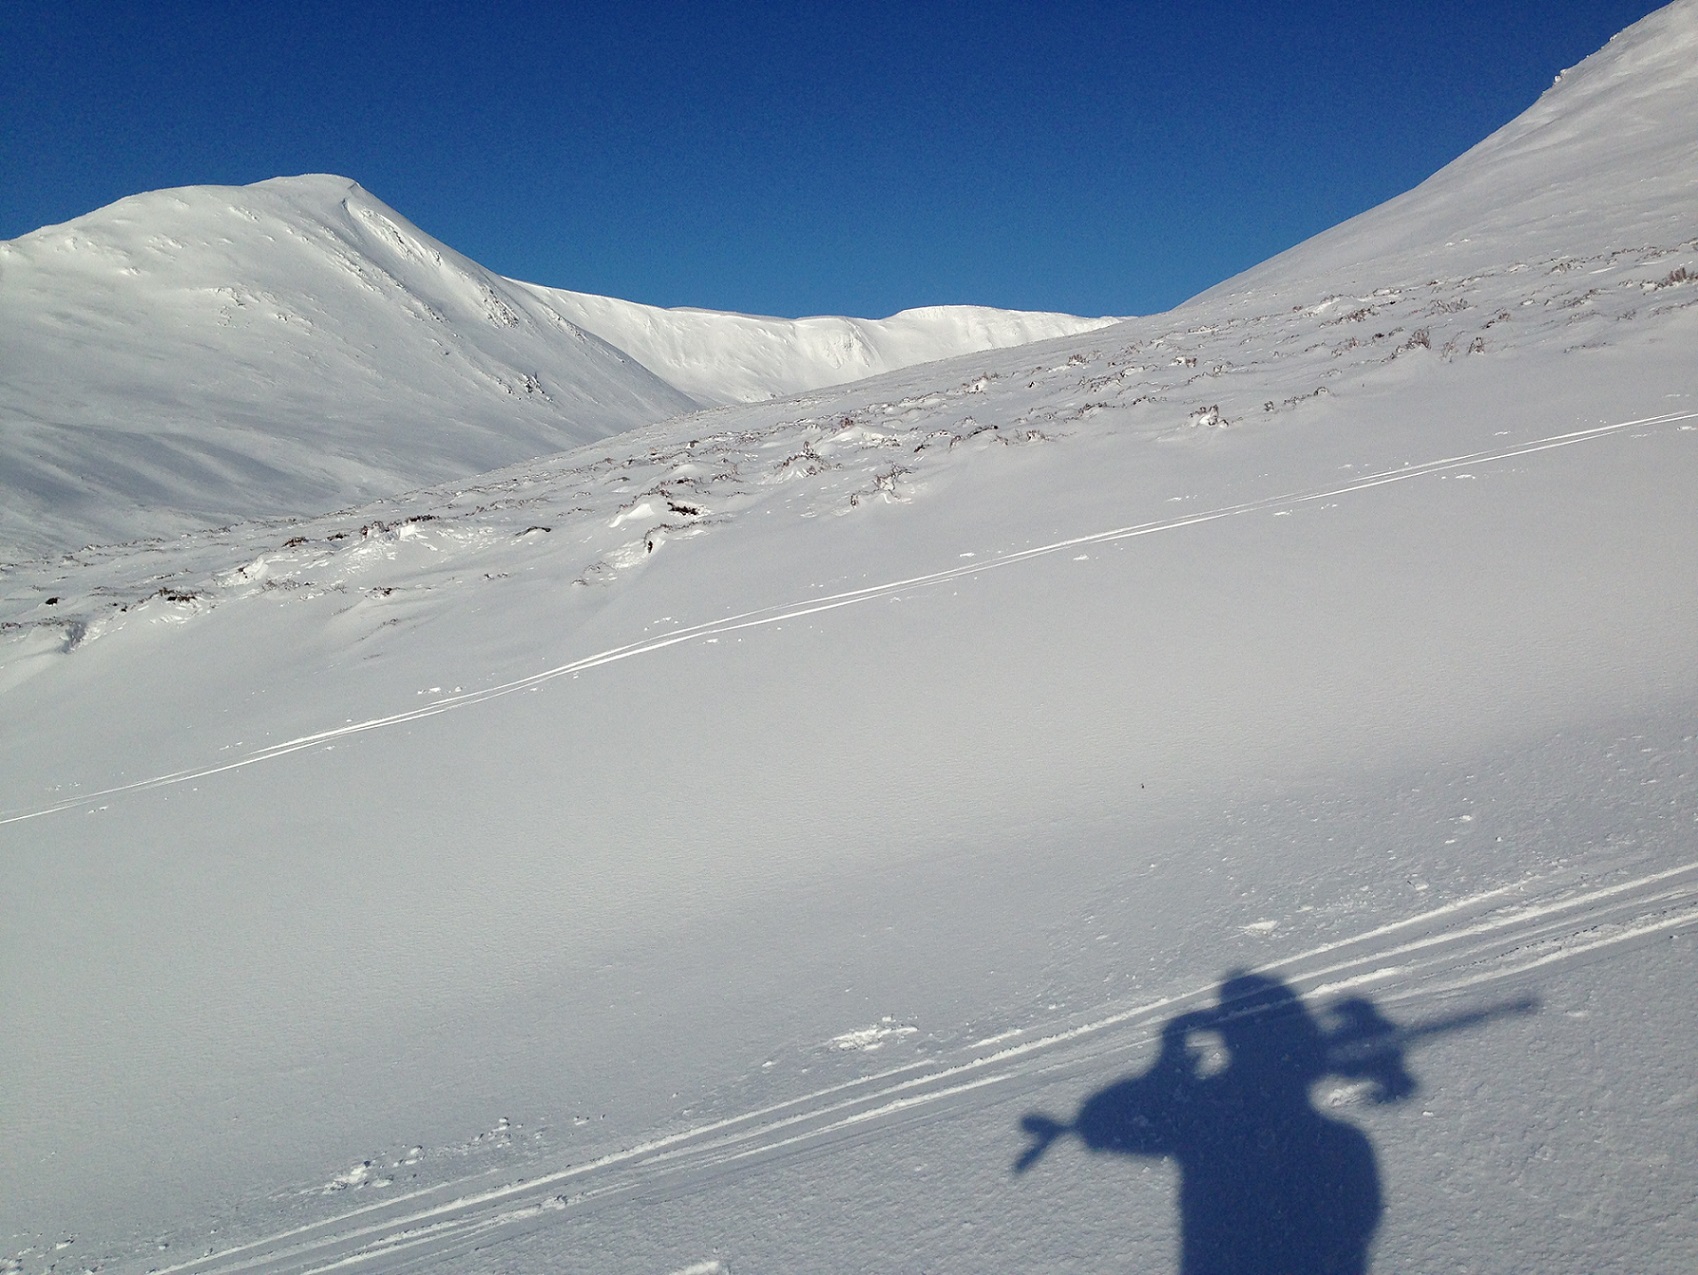 Shadow on ski-slope.